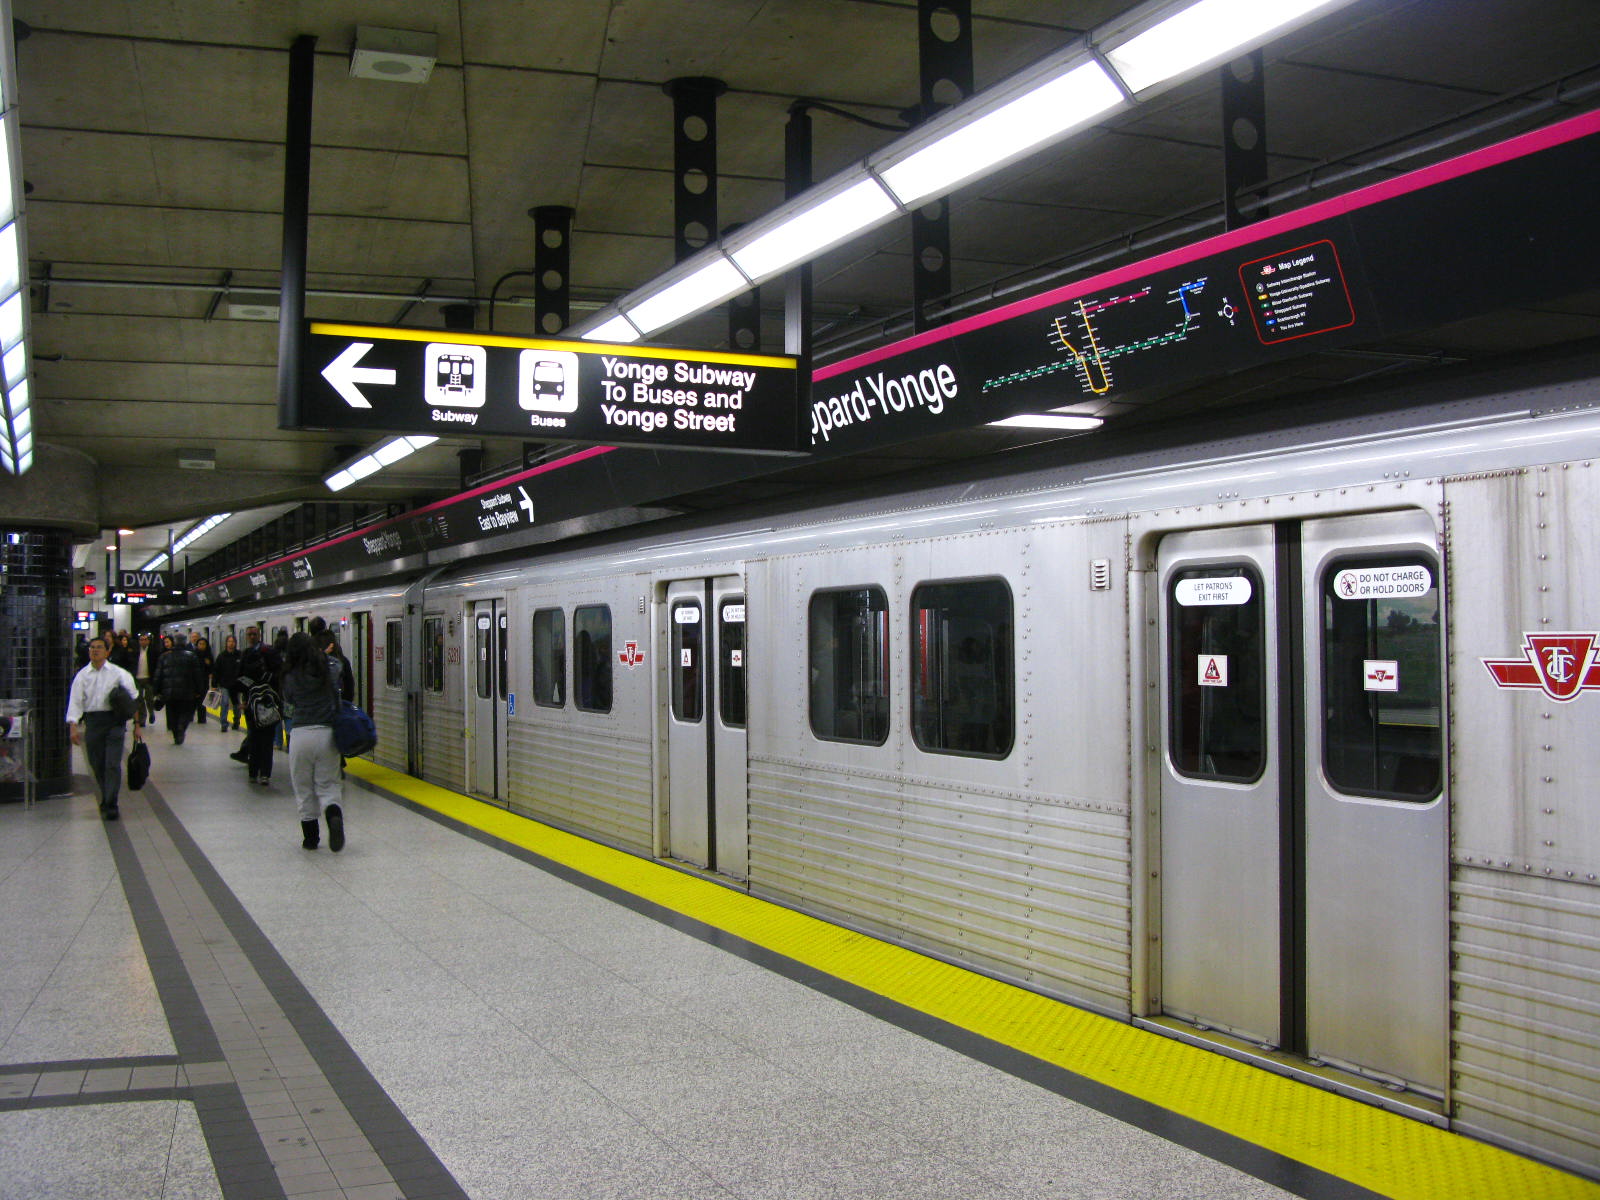 This image shows Sheppard-Yonge station at platform-level.